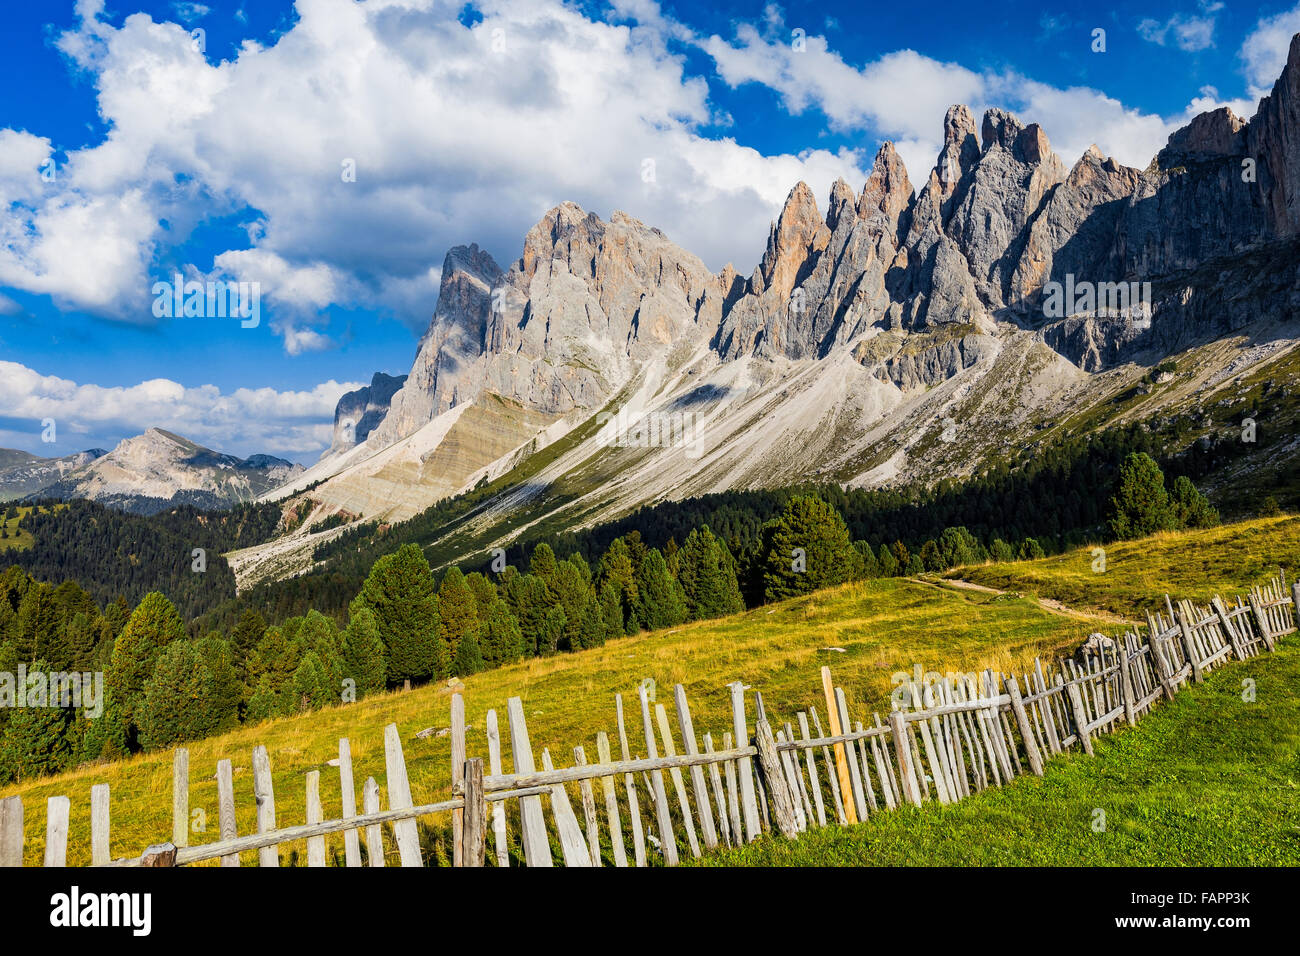 The Odle mountain group. Alpine grasslands, wooden fences. Val di Funes, The Gardena Dolomites, South Tyrol, Italian Alps. Europe. Stock Photo